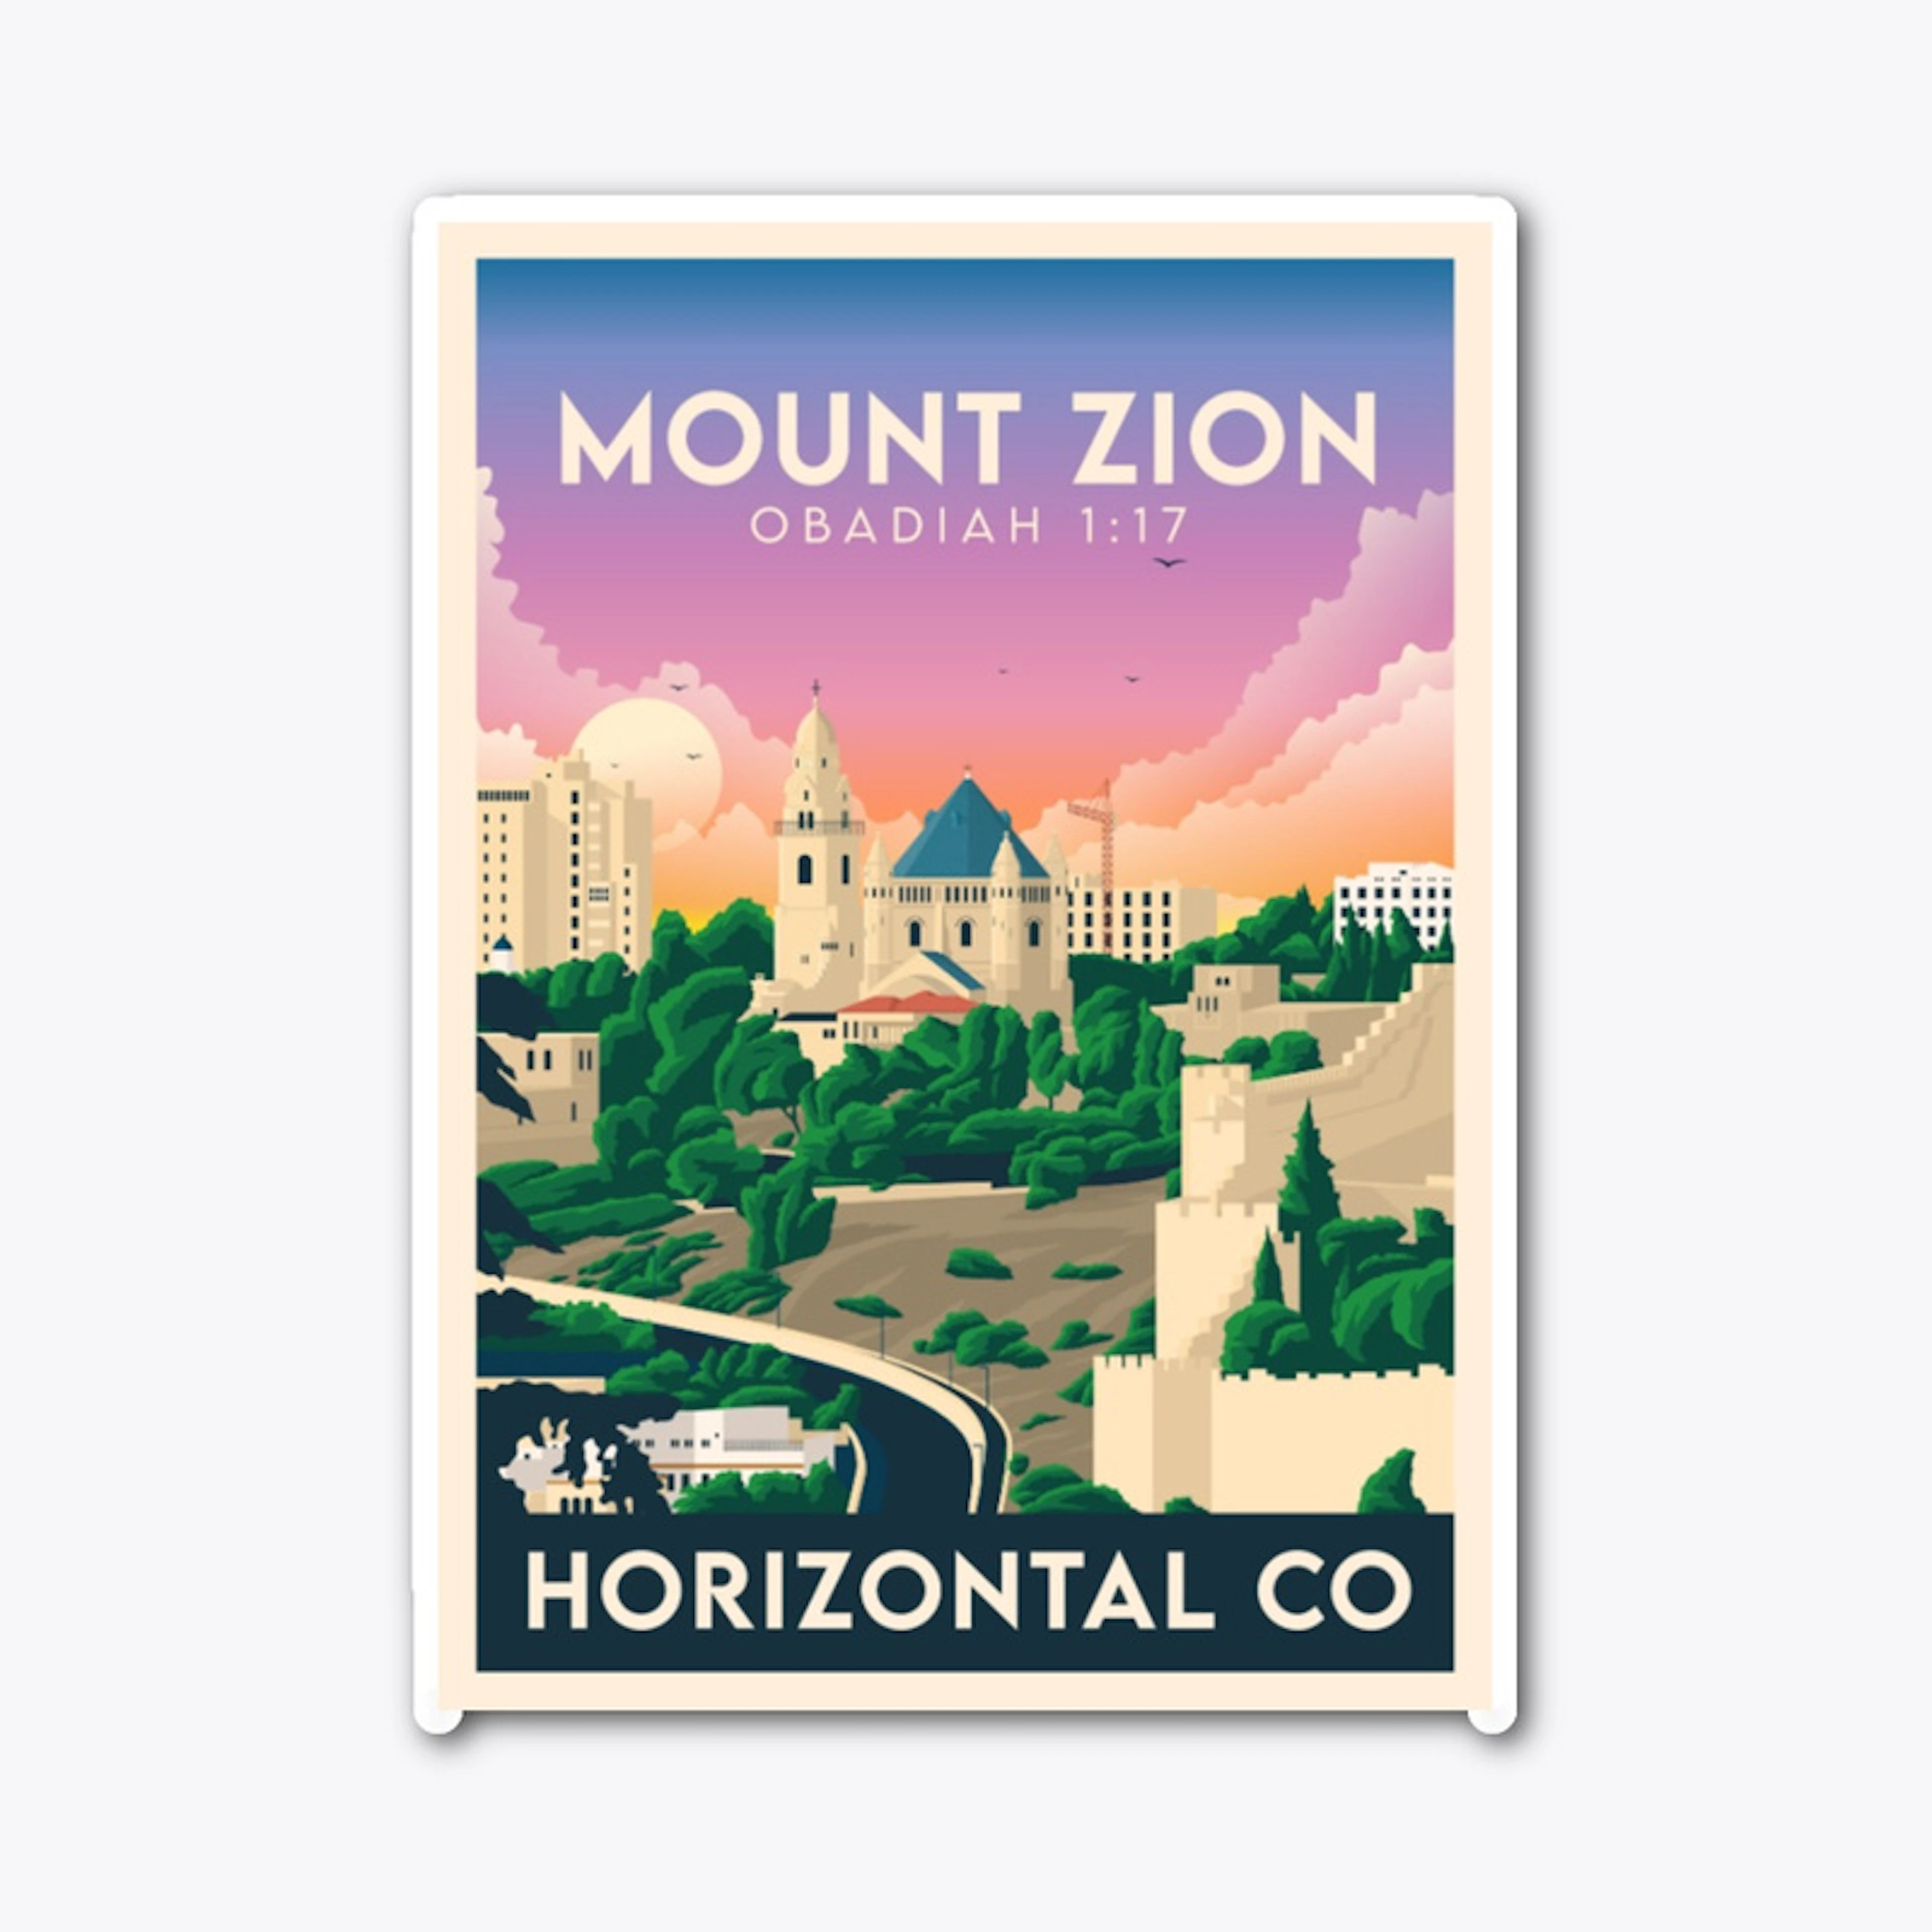 MOUNT ZION